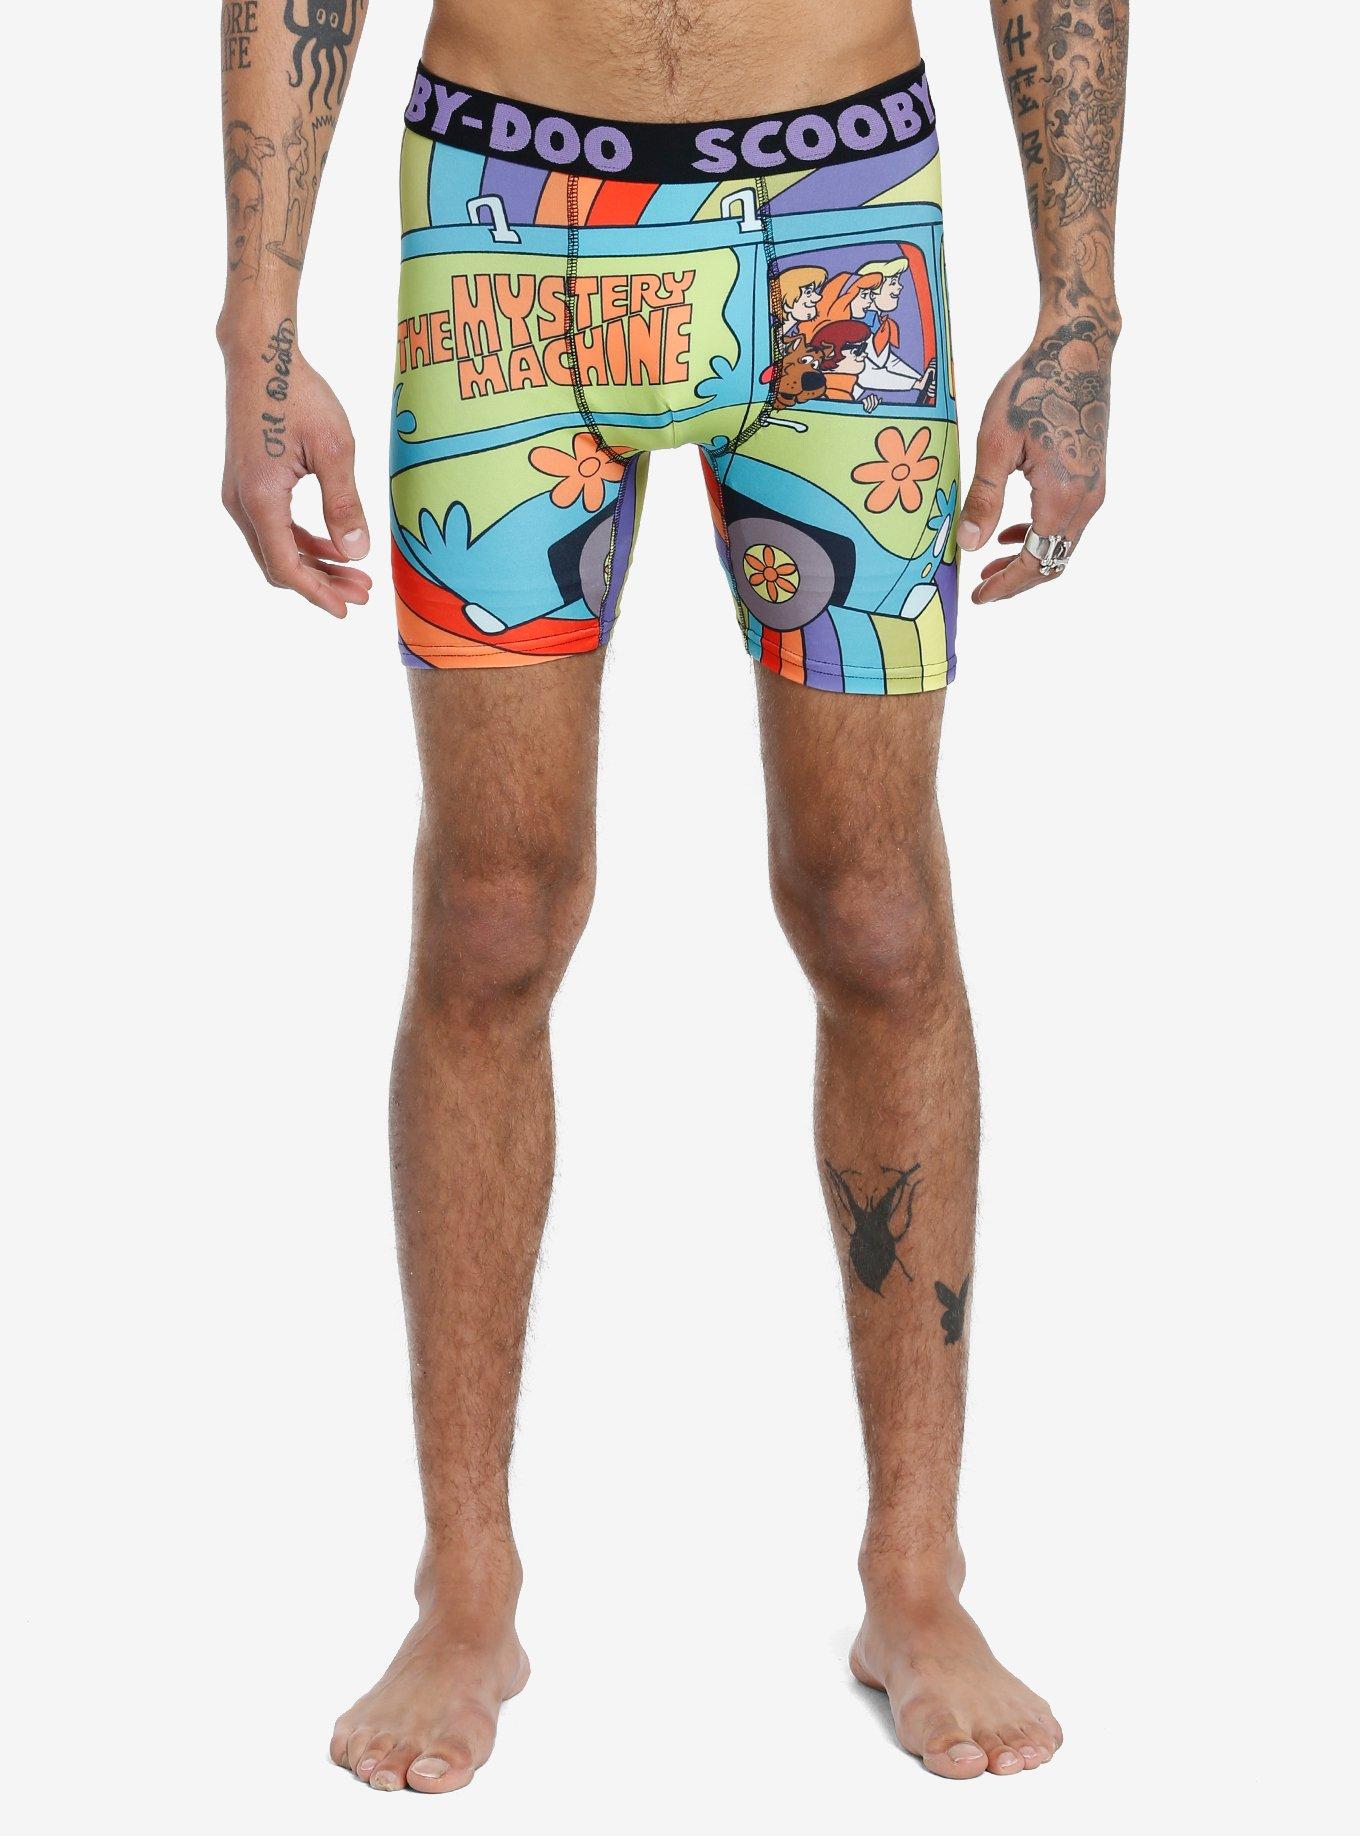 Scooby Doo Classic Boxer Briefs - Mens Boxer Briefs Underwear Loungewear  Set, Shaggy, Velma, Mystery Machine Boxer Briefs, White, Medium :  : Clothing, Shoes & Accessories